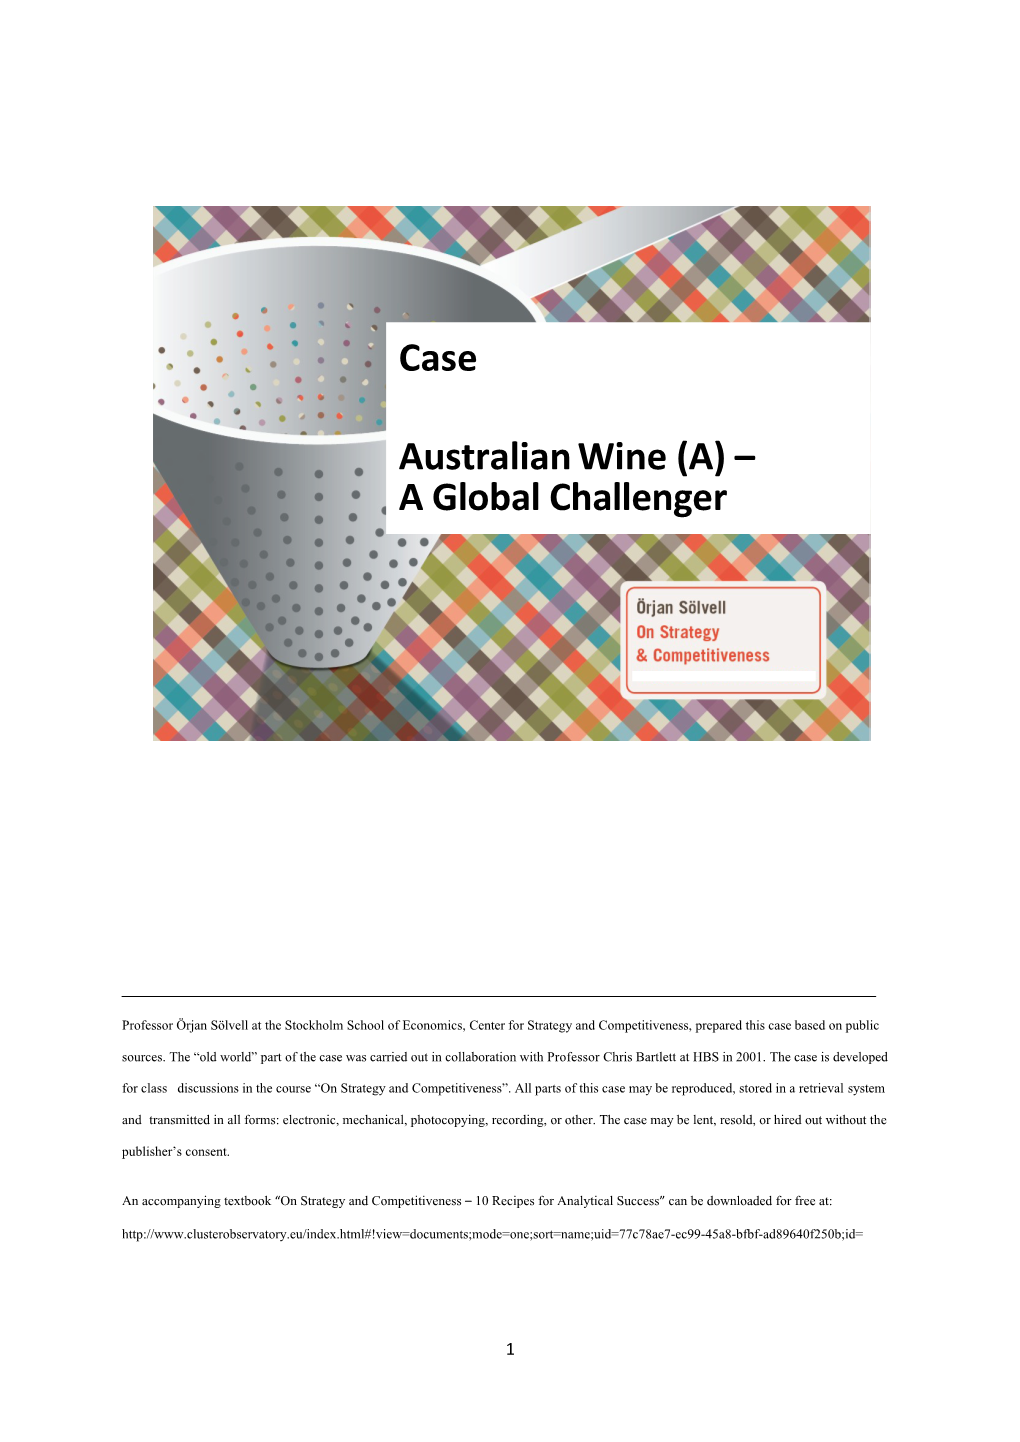 Case Australian Wine (A) – a Global Challenger